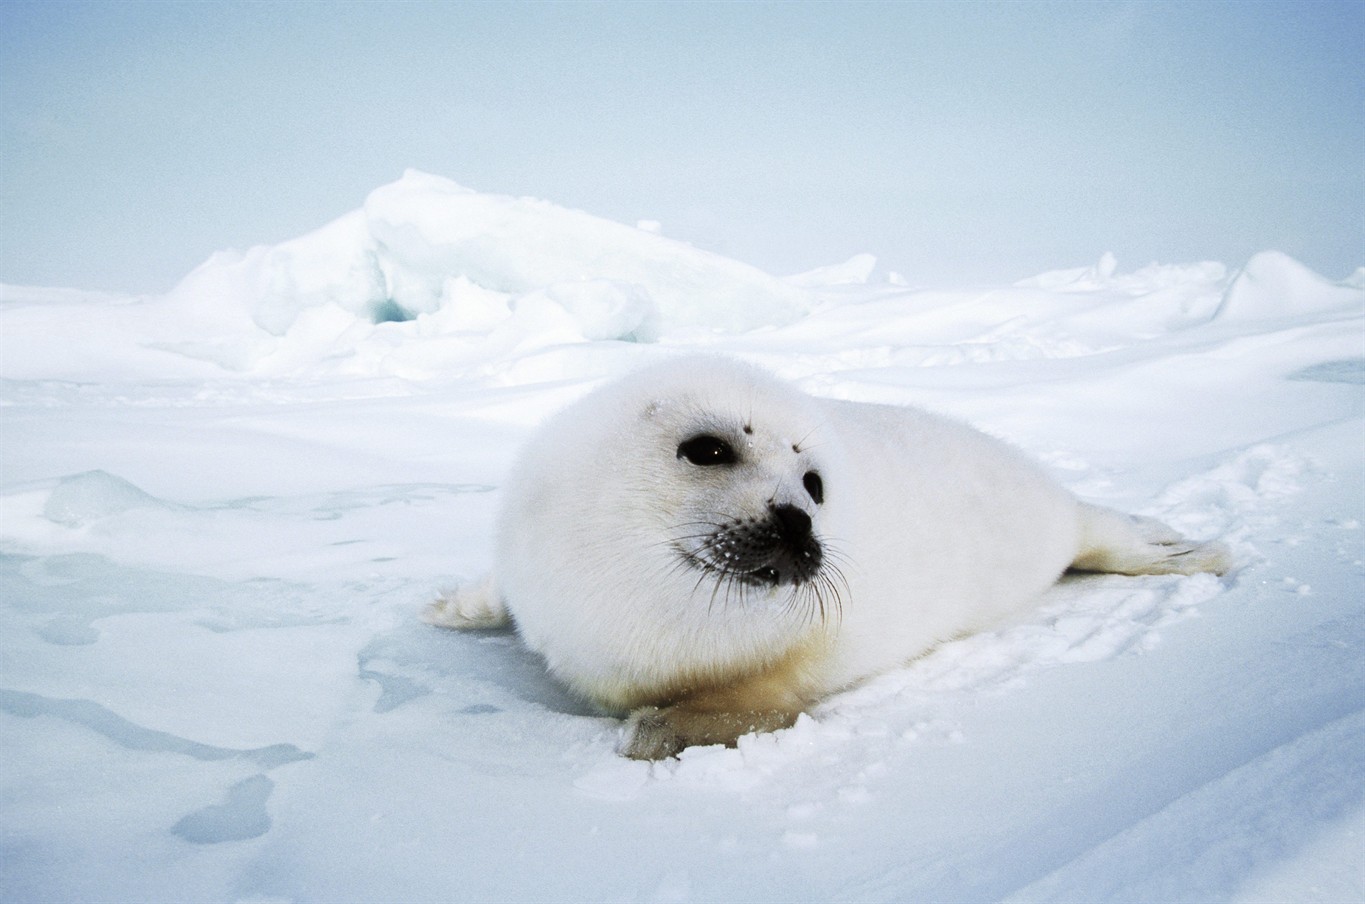 Commercial seal hunt added threat as animals' habitat deteriorates:  Non-profit